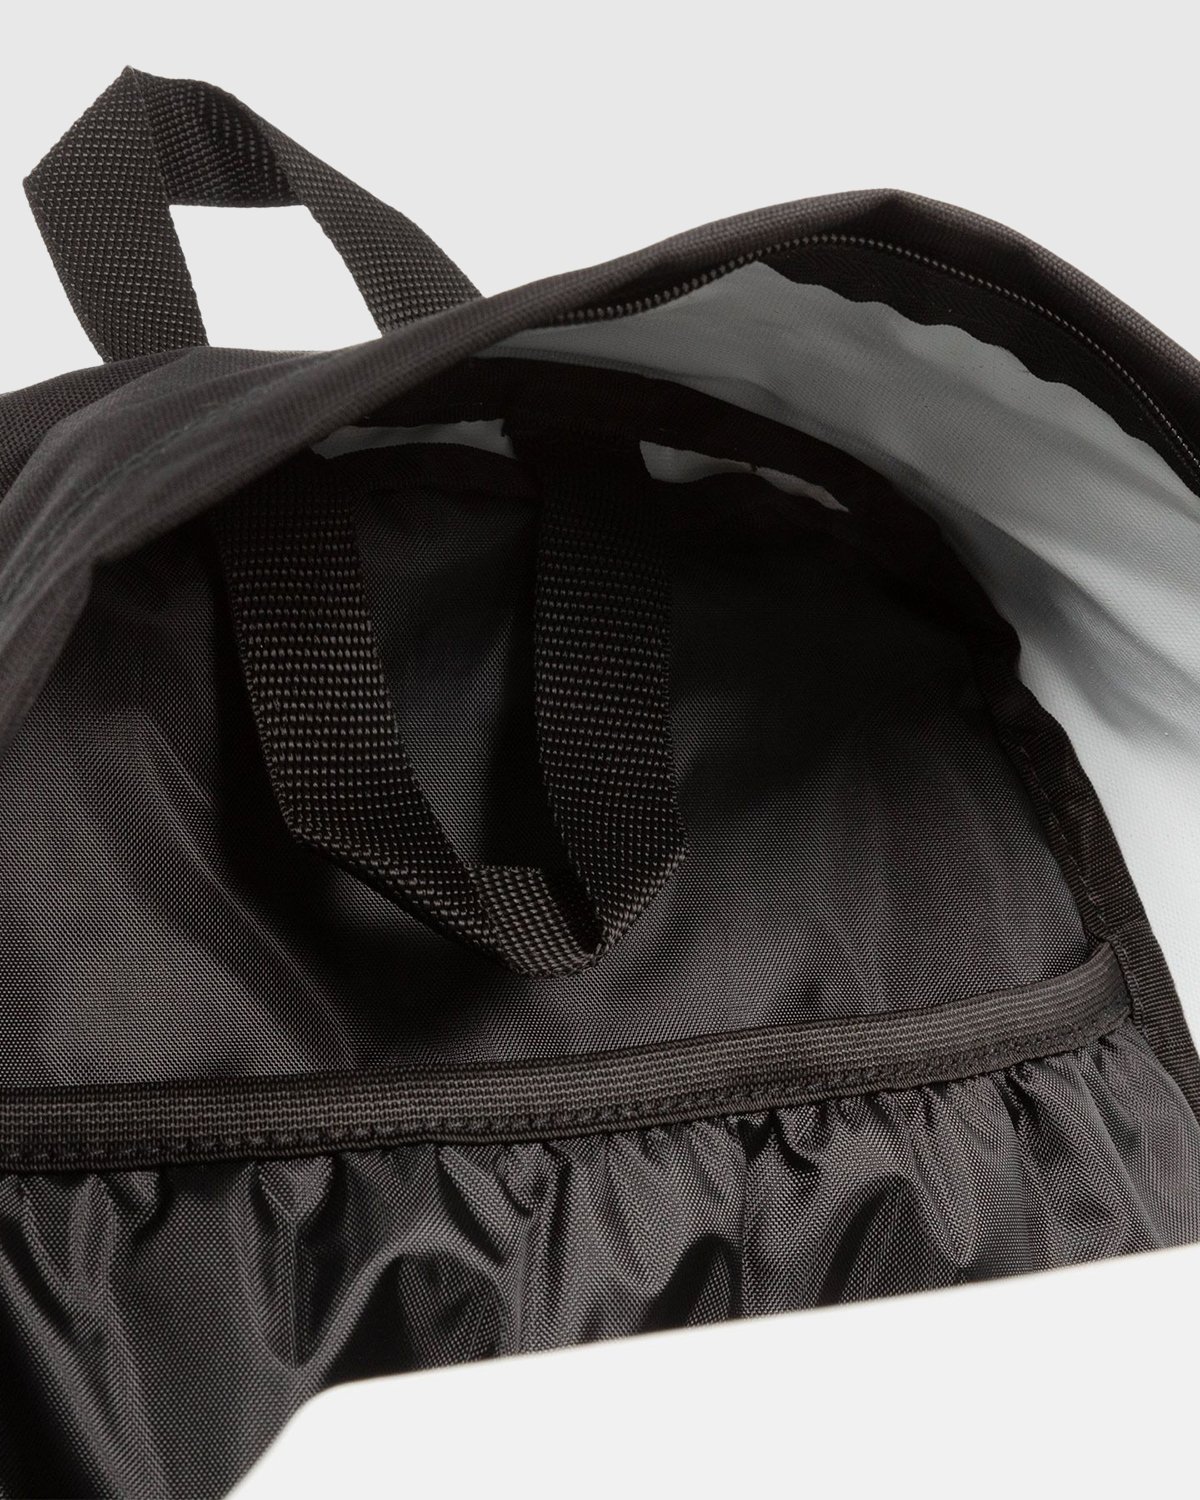 MM6 Maison Margiela x Eastpak - Padded Backpack Black - Accessories - Black - Image 8